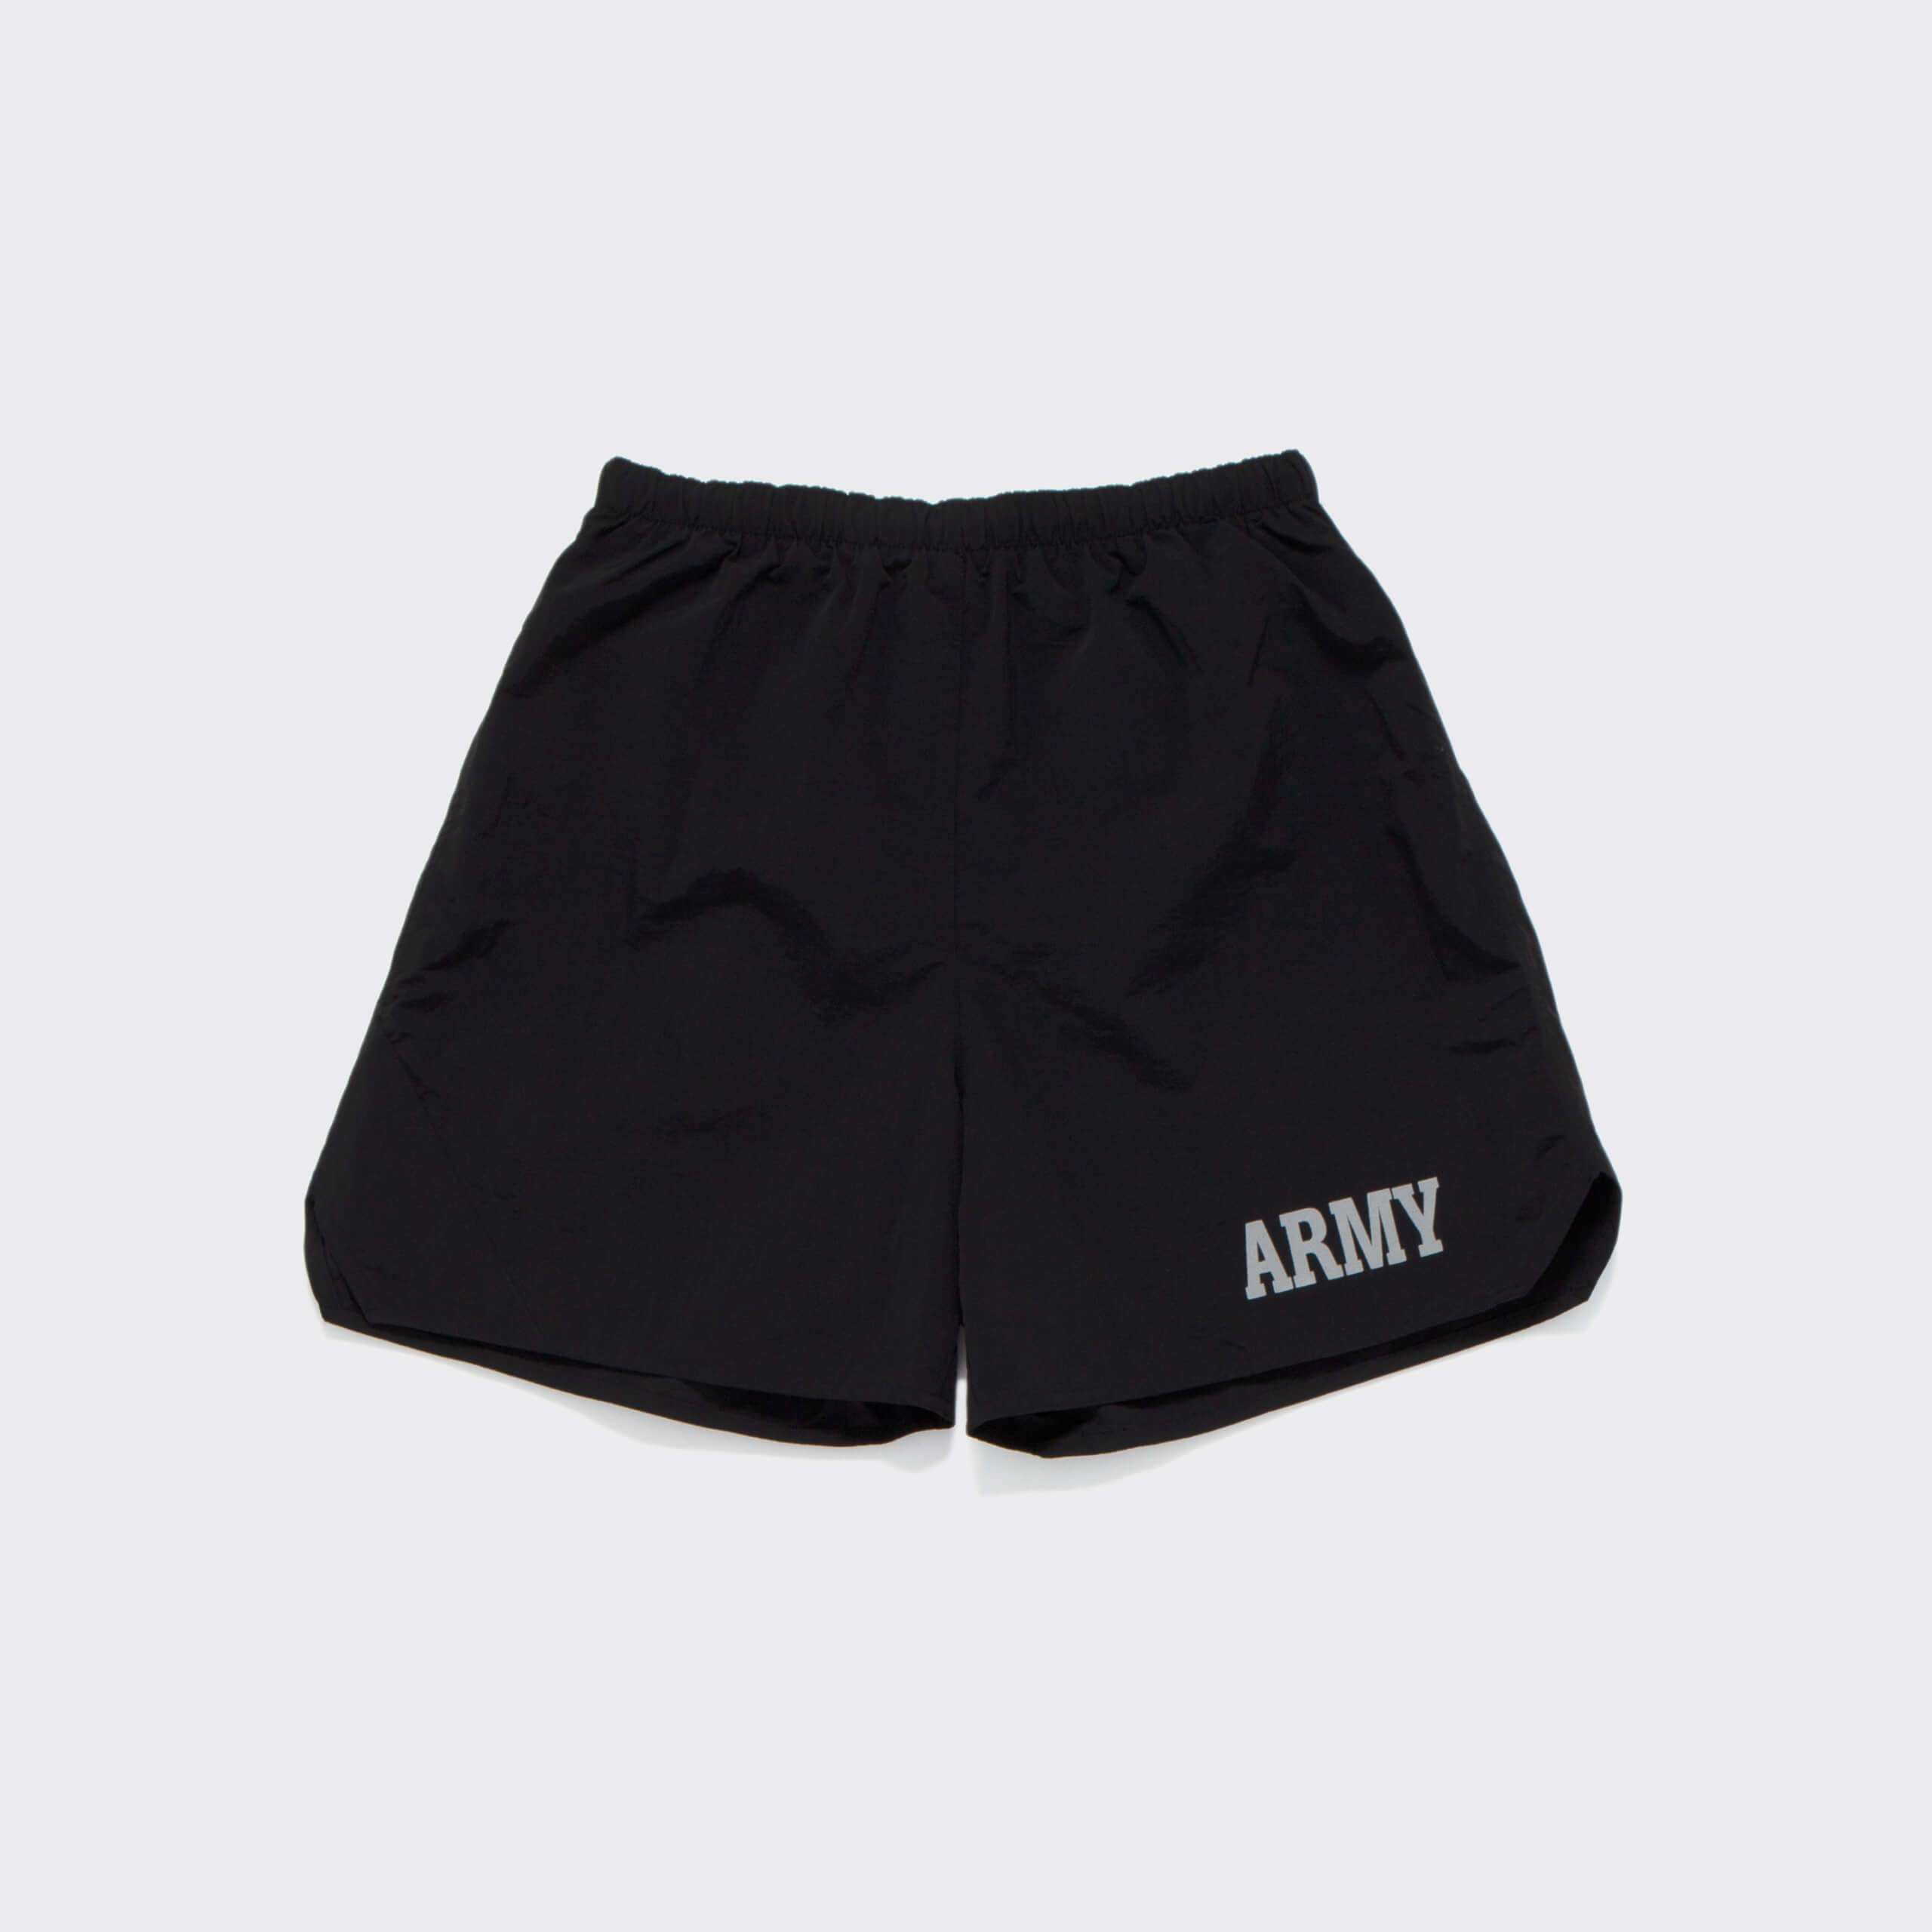 u-s-army-physical-training-shorts-black_p2